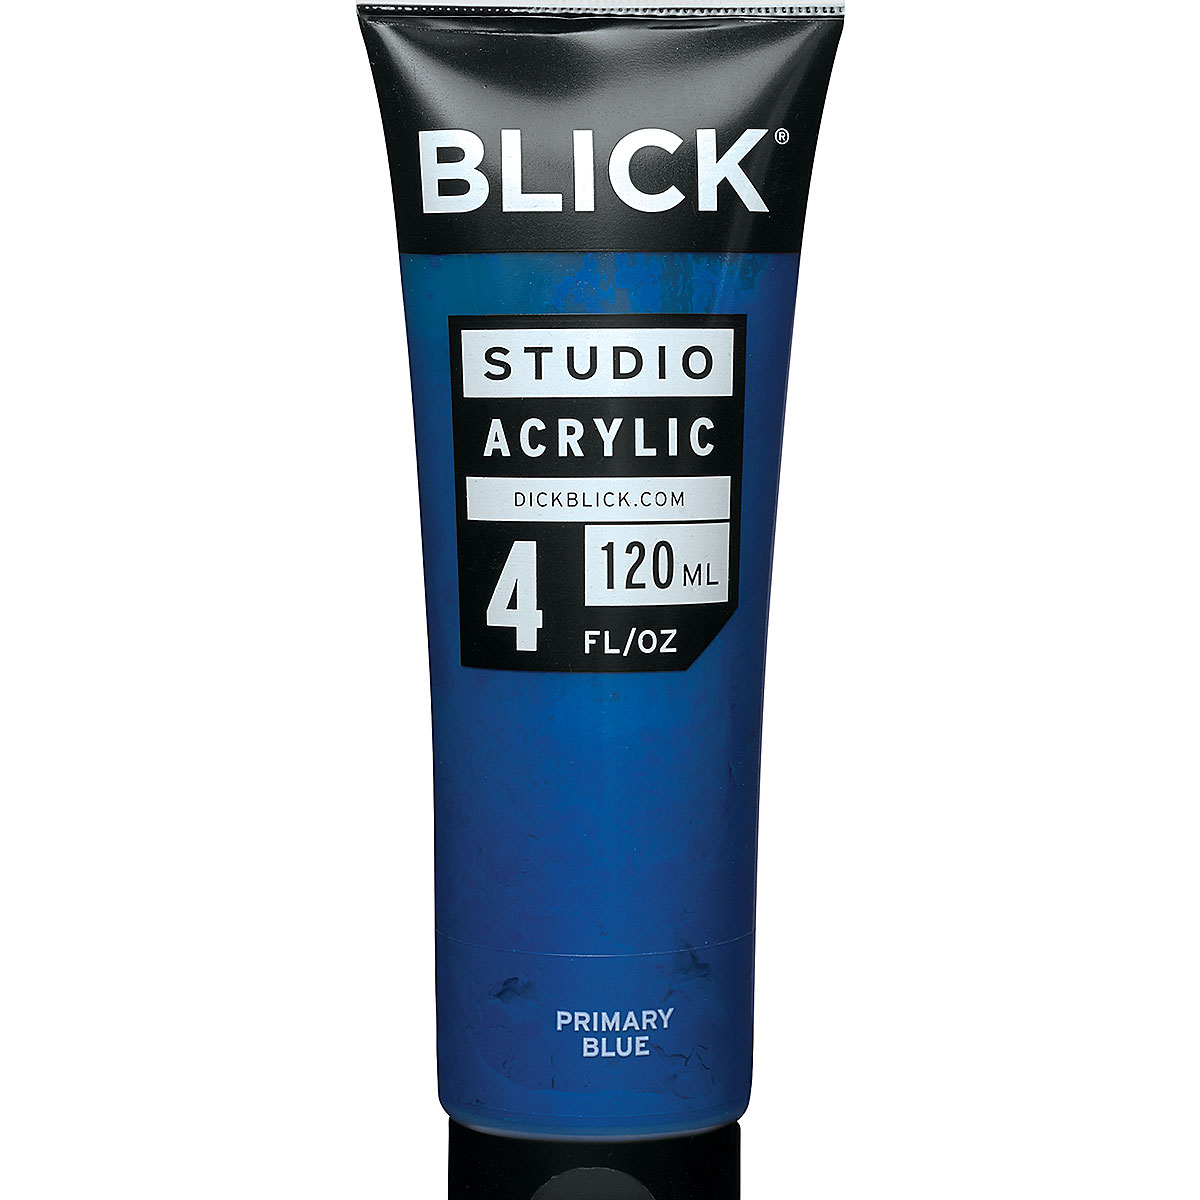 Blick Studio Acrylics - Primary Blue, 4 oz tube